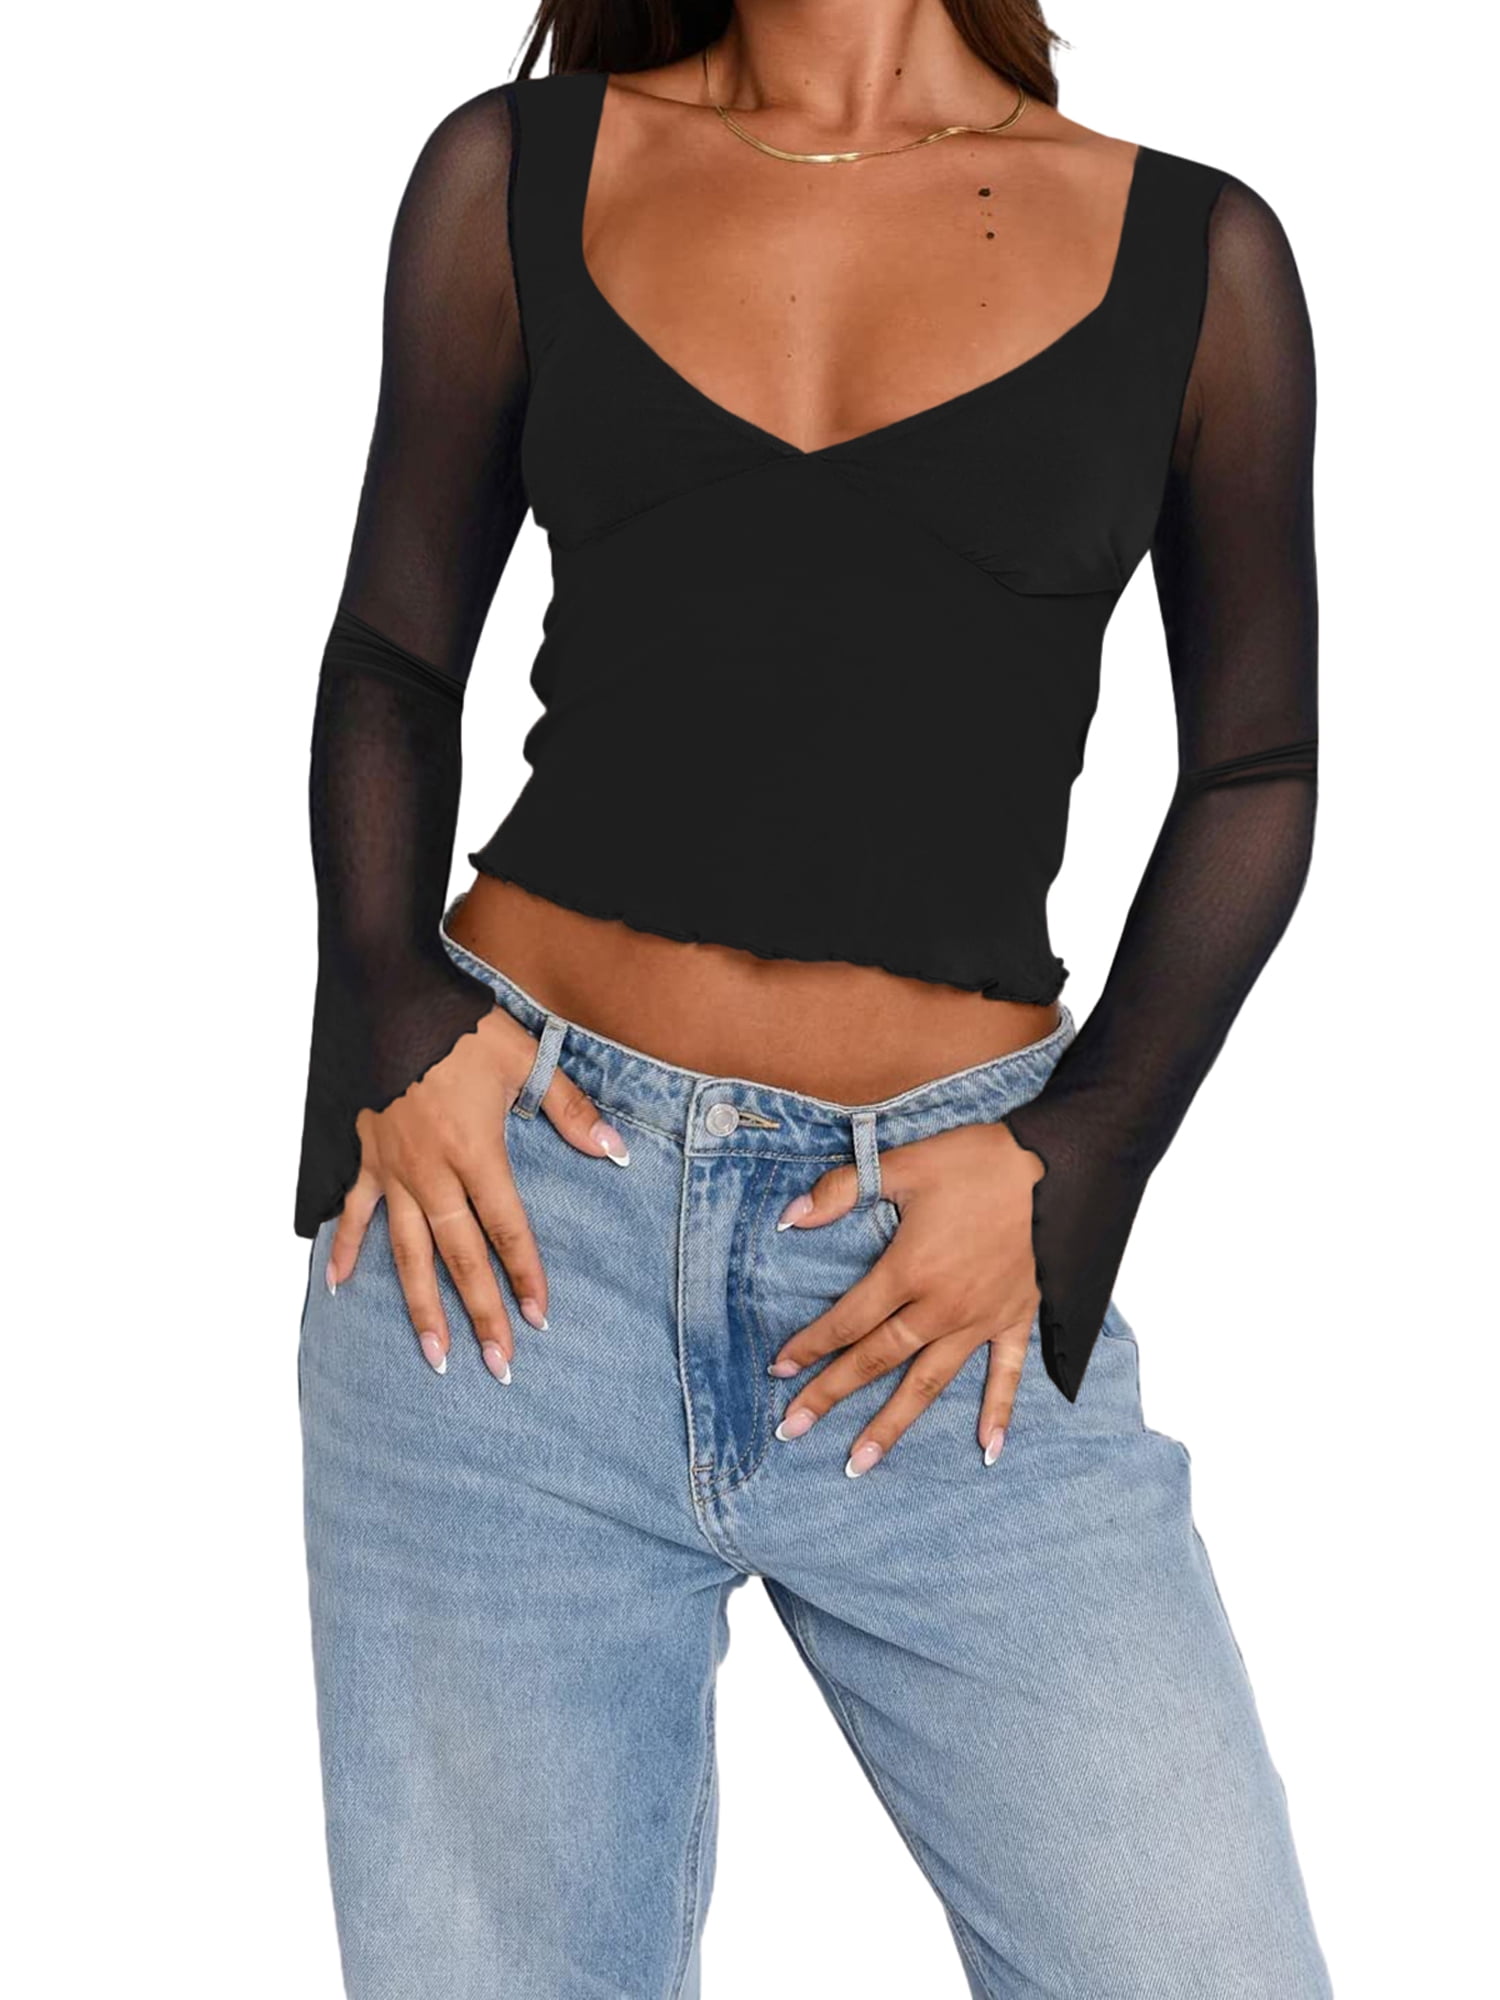 wybzd Women's Sweetheart Neck Sheer Mesh Long Sleeve Crop Top T-Shirt Black  M 